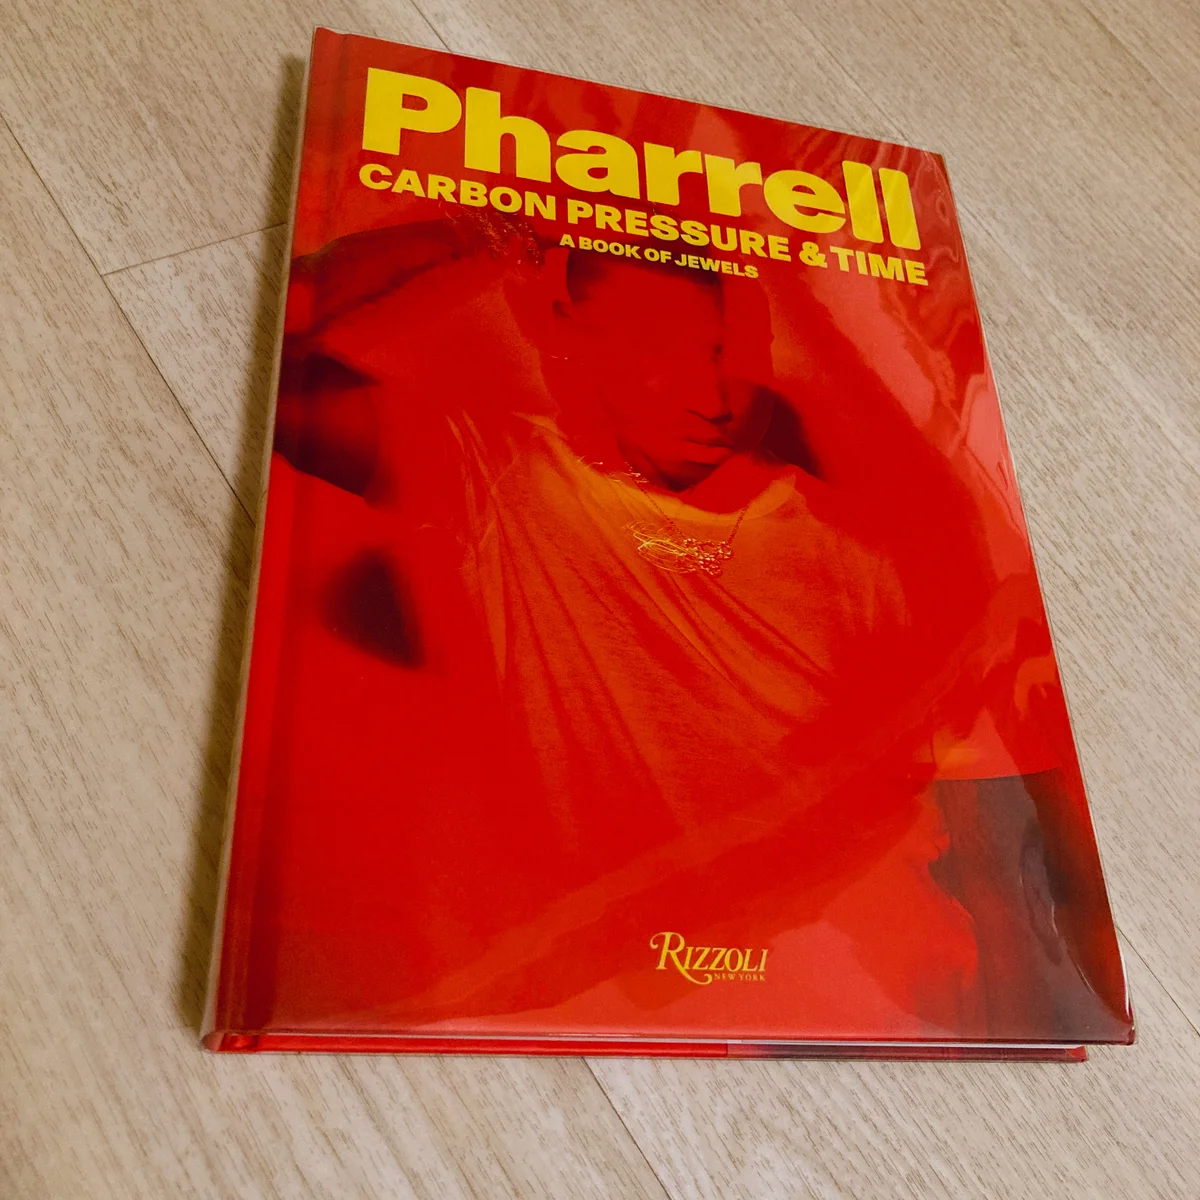 『Pharrell:  CARBON PRESSURE & TIME』（RIZZOLI）